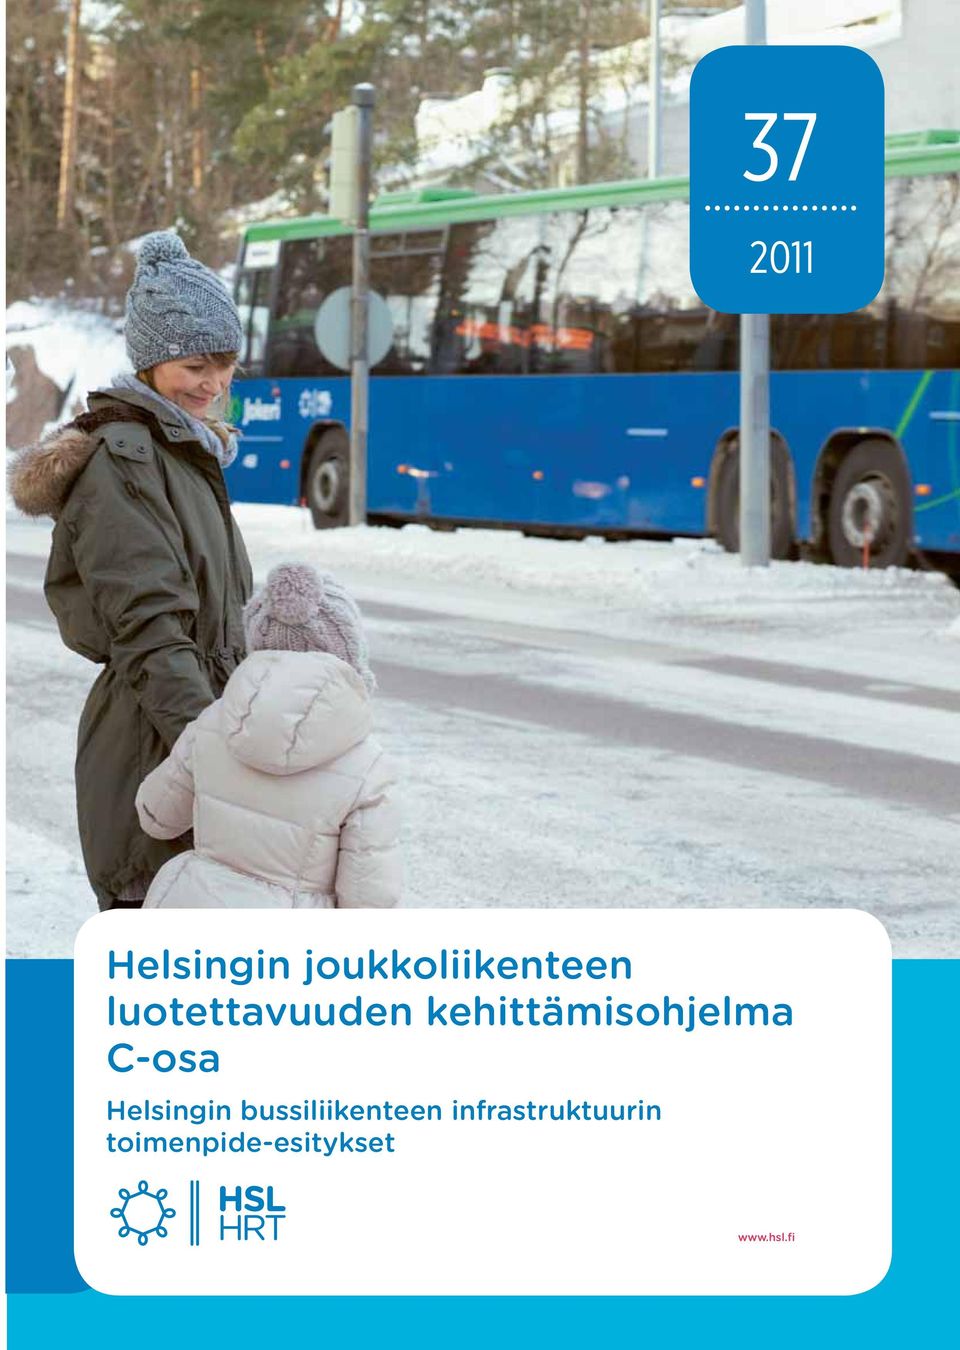 C-osa Helsingin bussiliikenteen